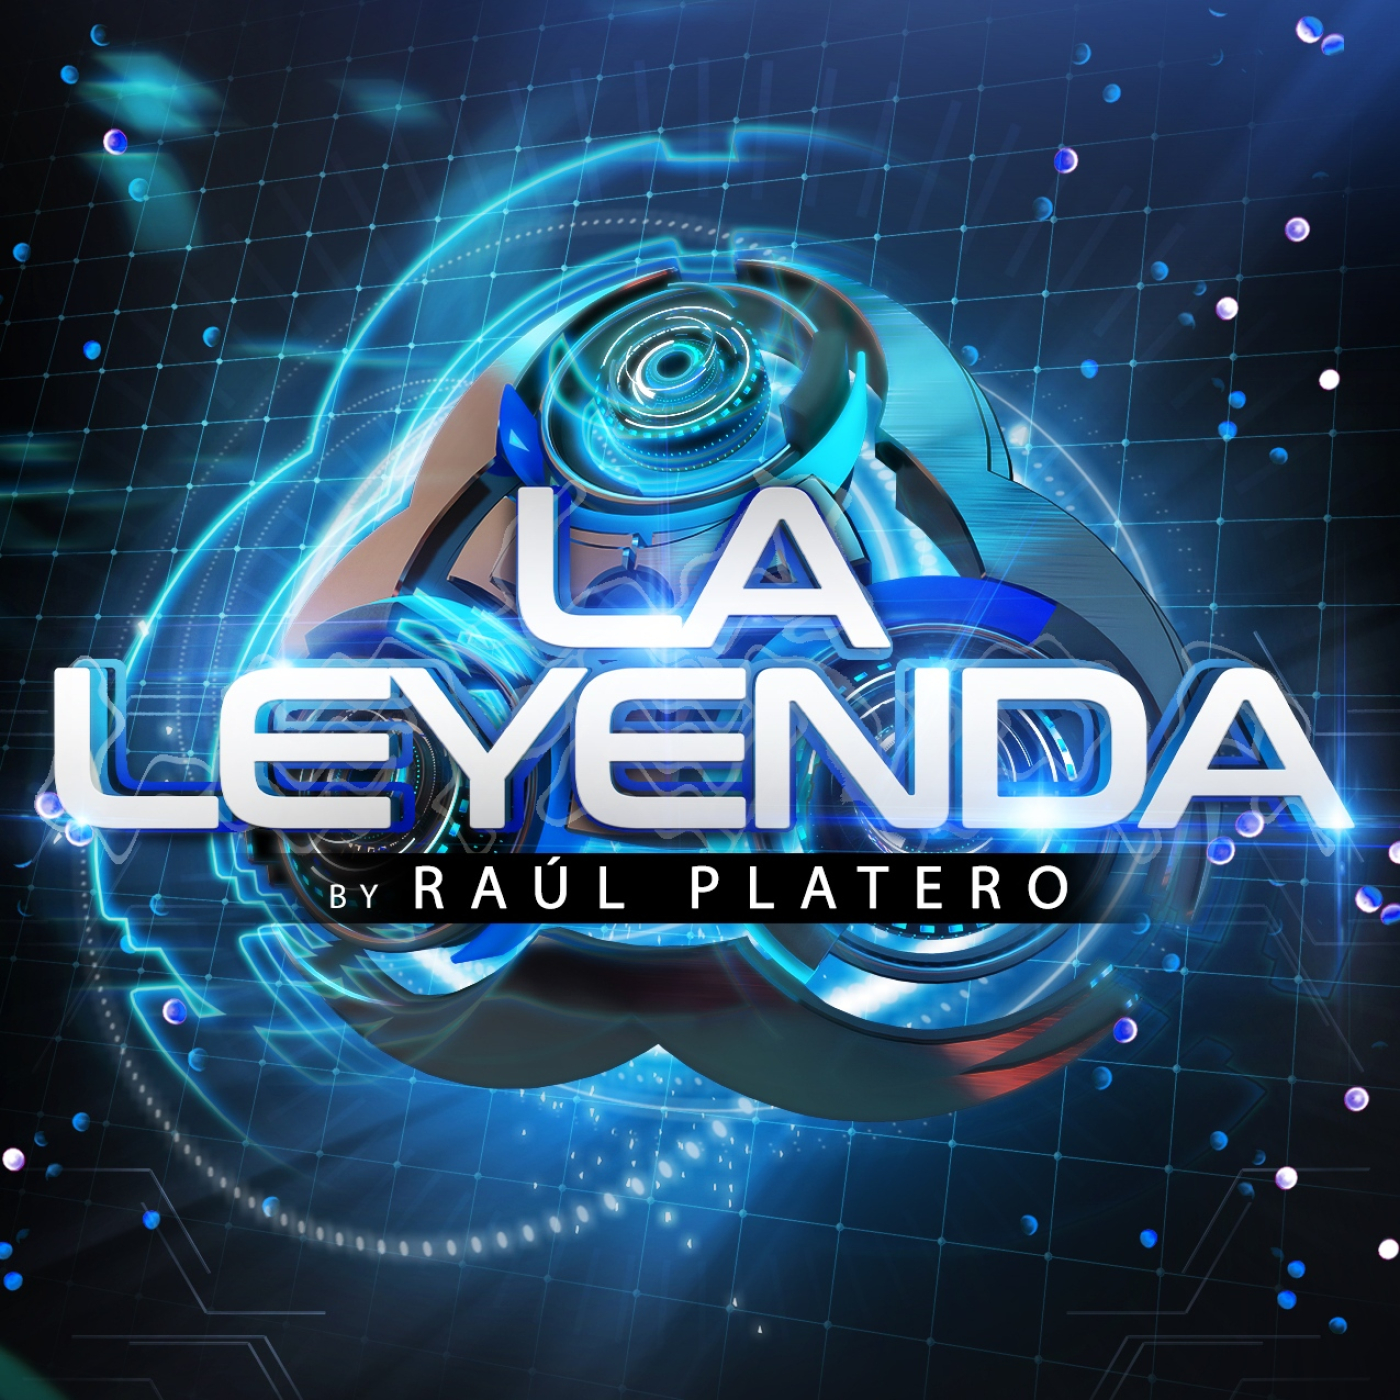 LA LEYENDA by RAUL PLATERO 2022 (Lunes 5 Septiembre)